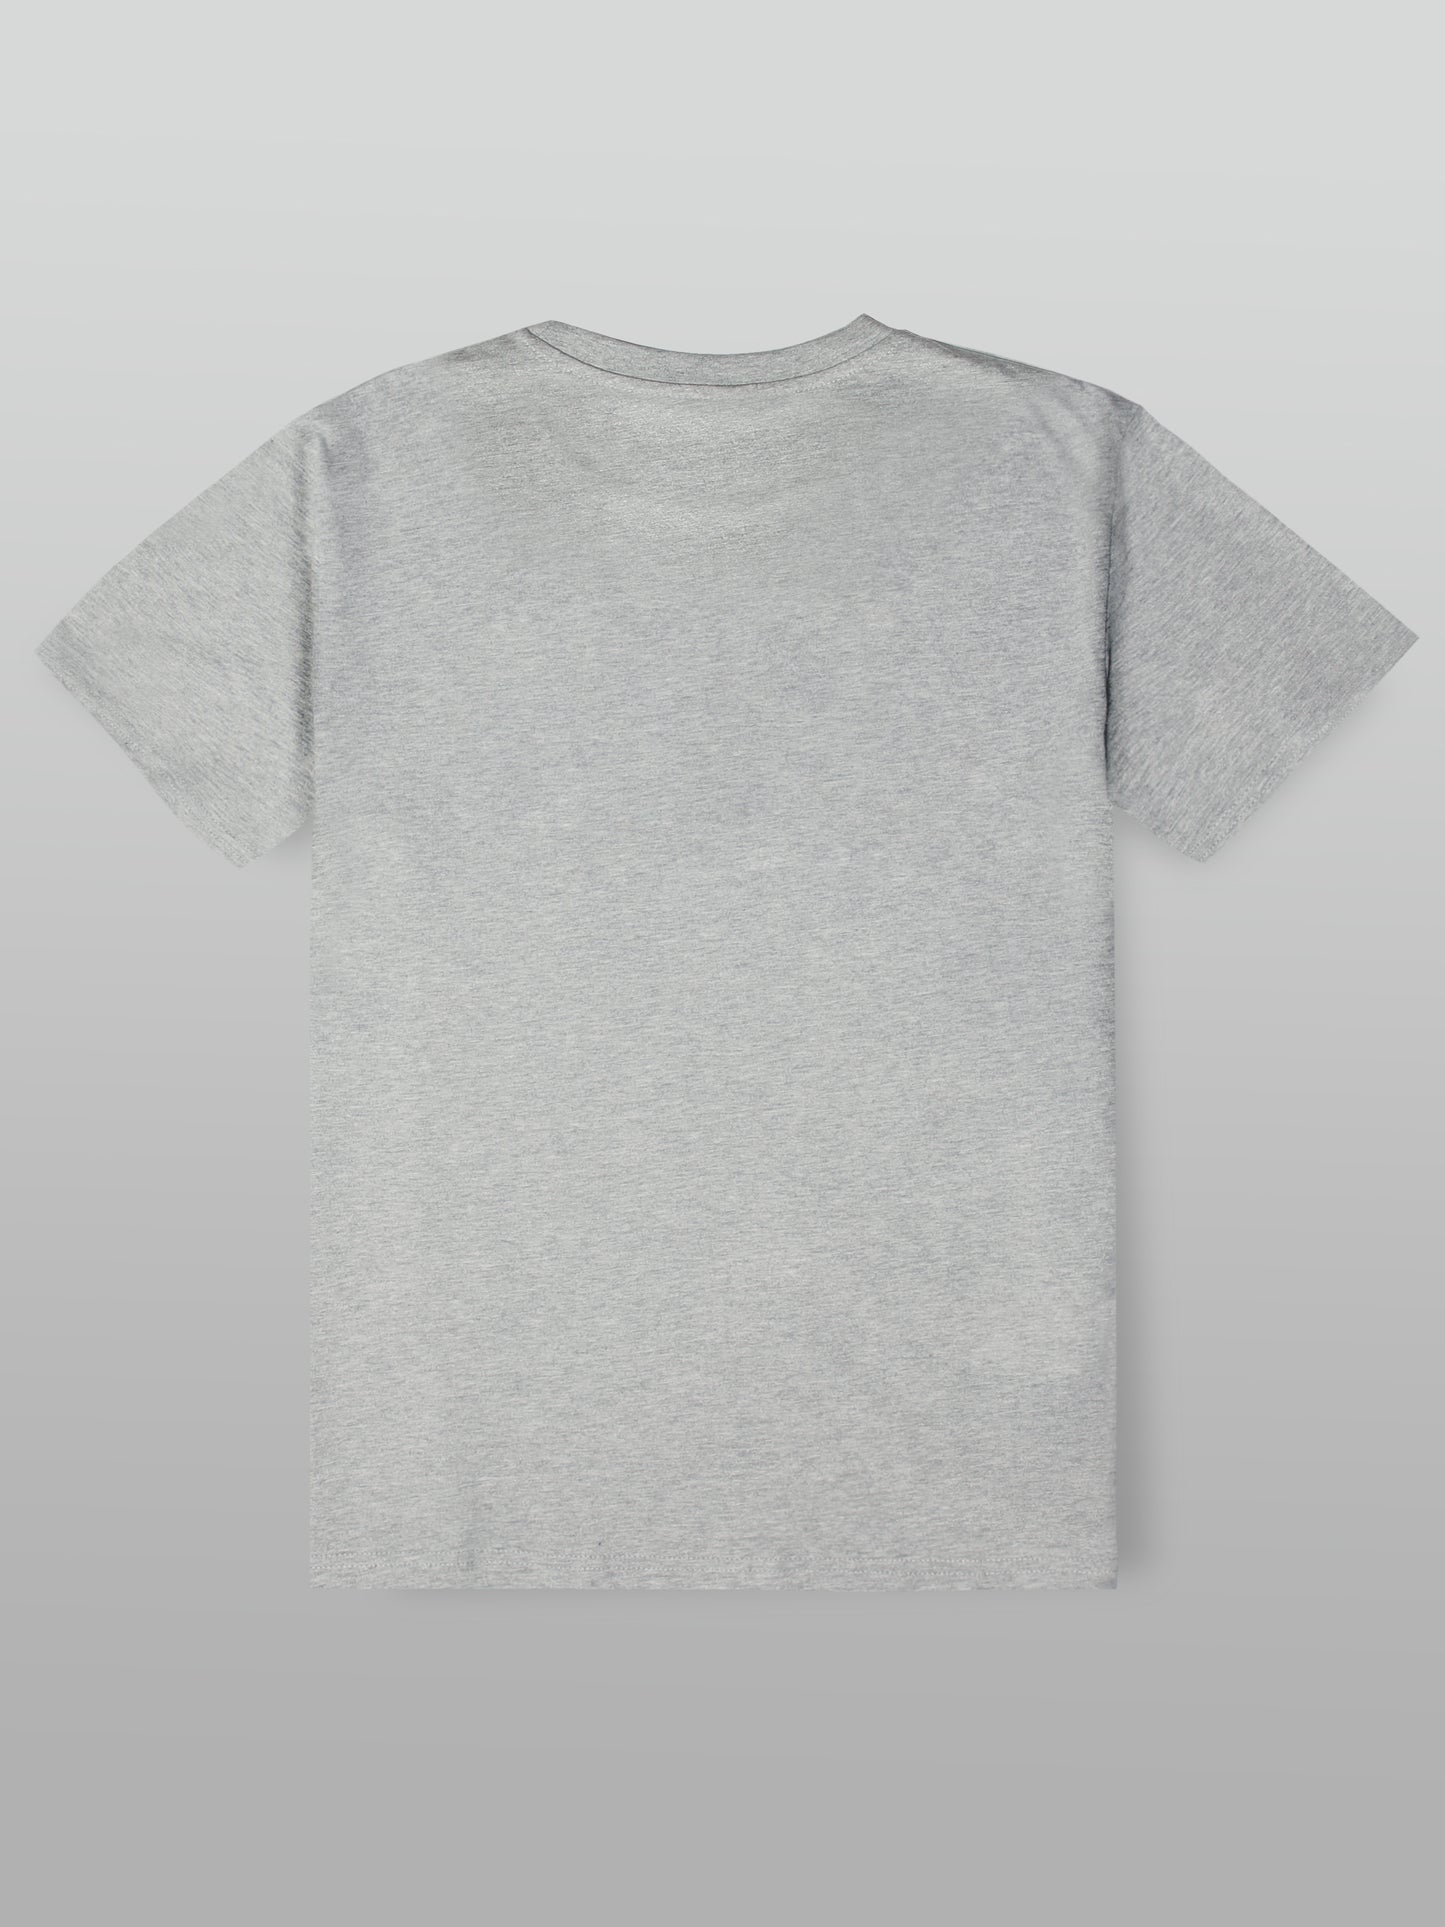 'Jnr Rocka' Oversize T-Shirt Heather Grey